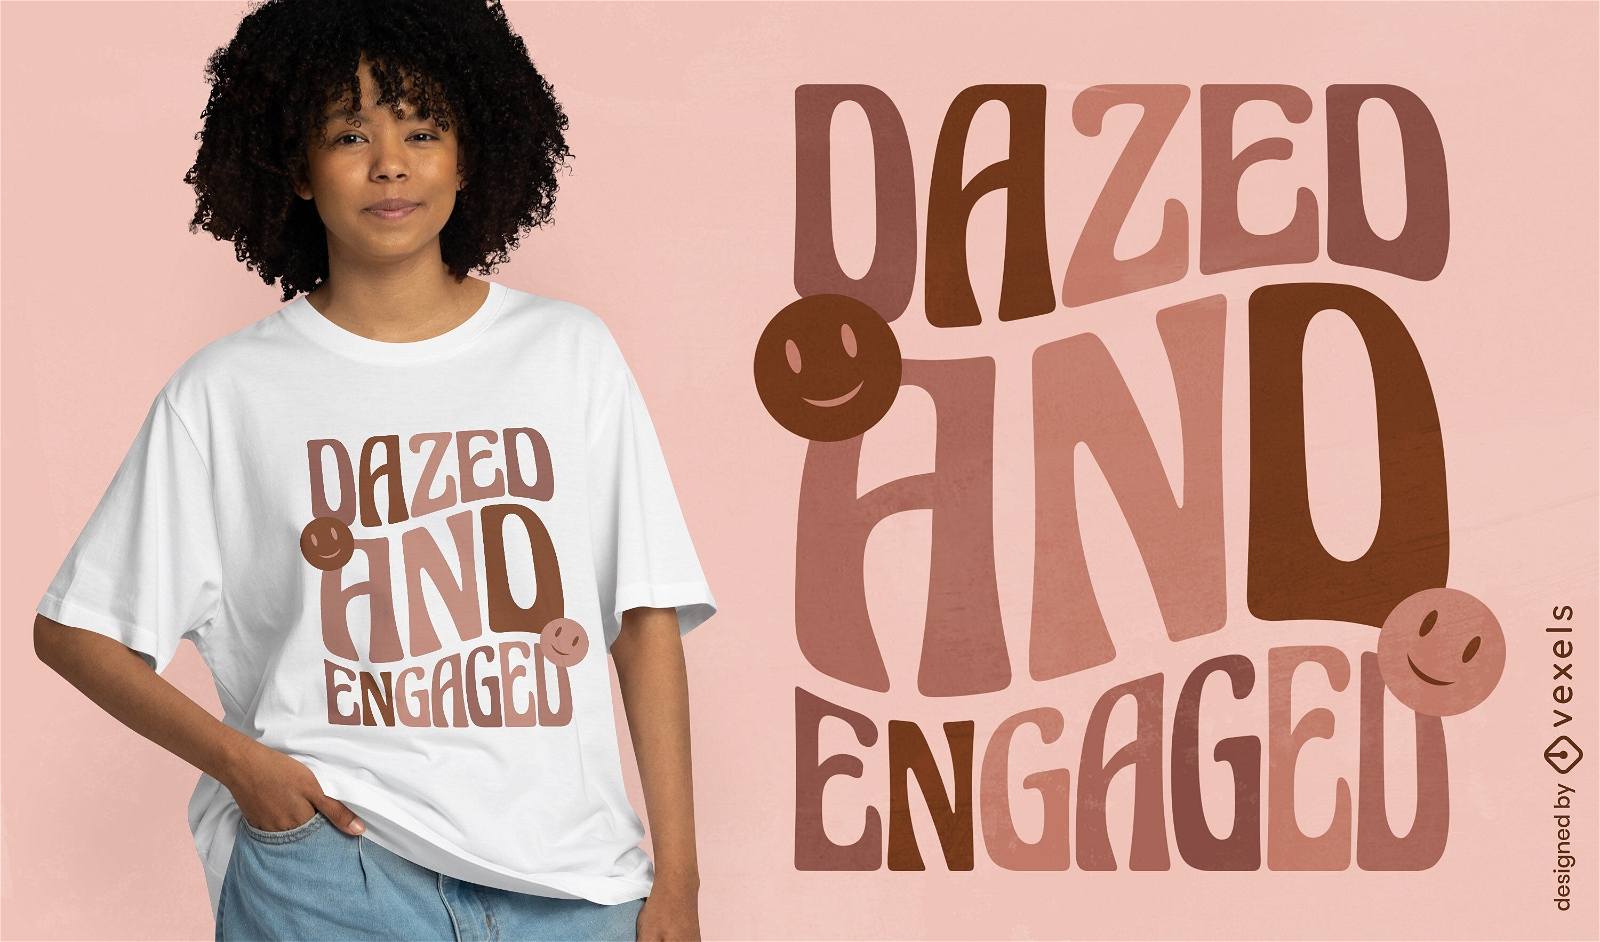 Dazed and engaged t-shirt design